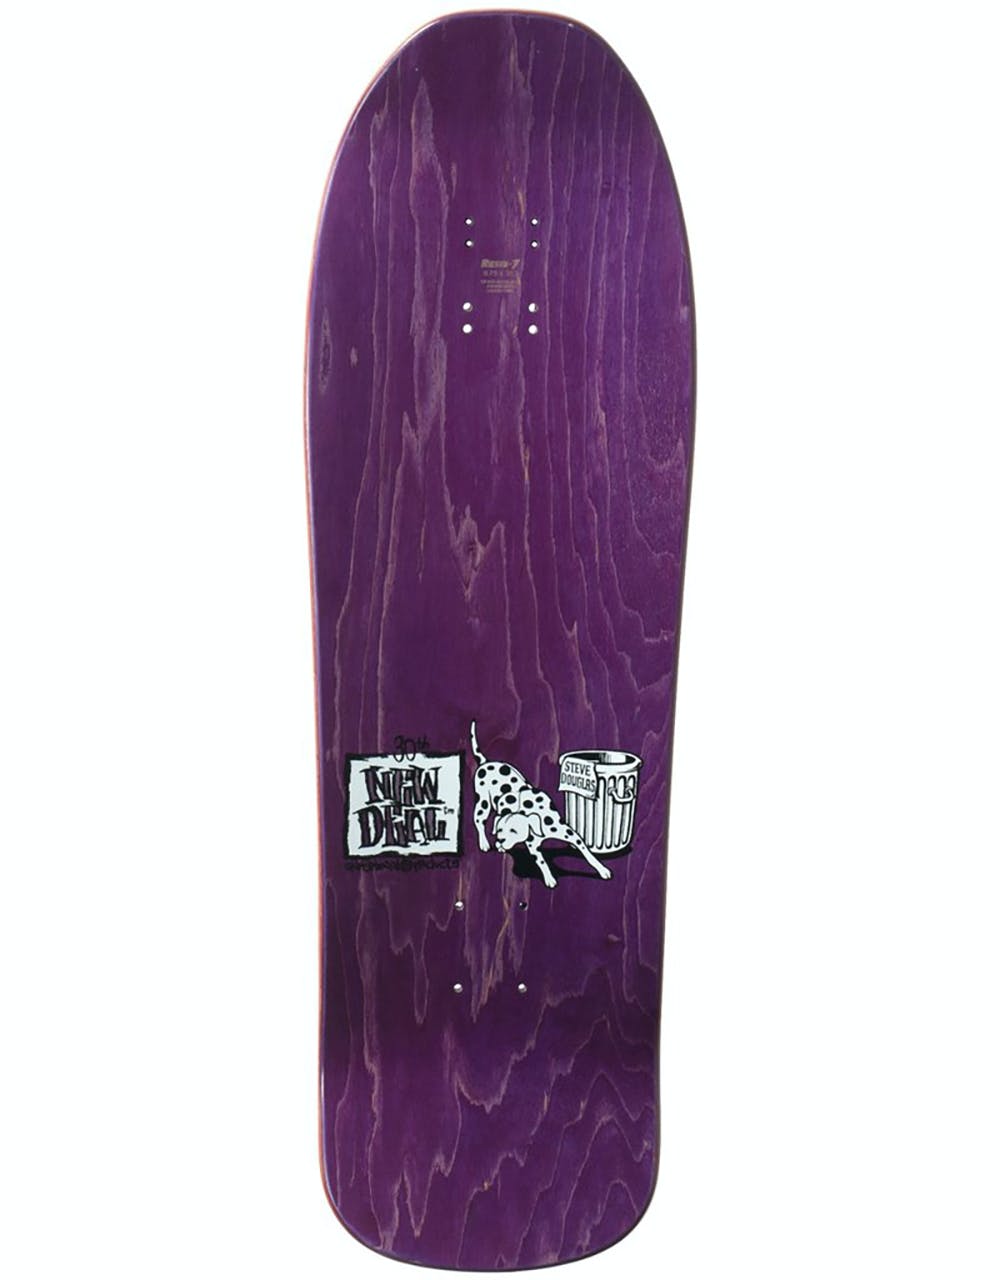 The New Deal Douglas Chums SP Skateboard Deck - 9.75"